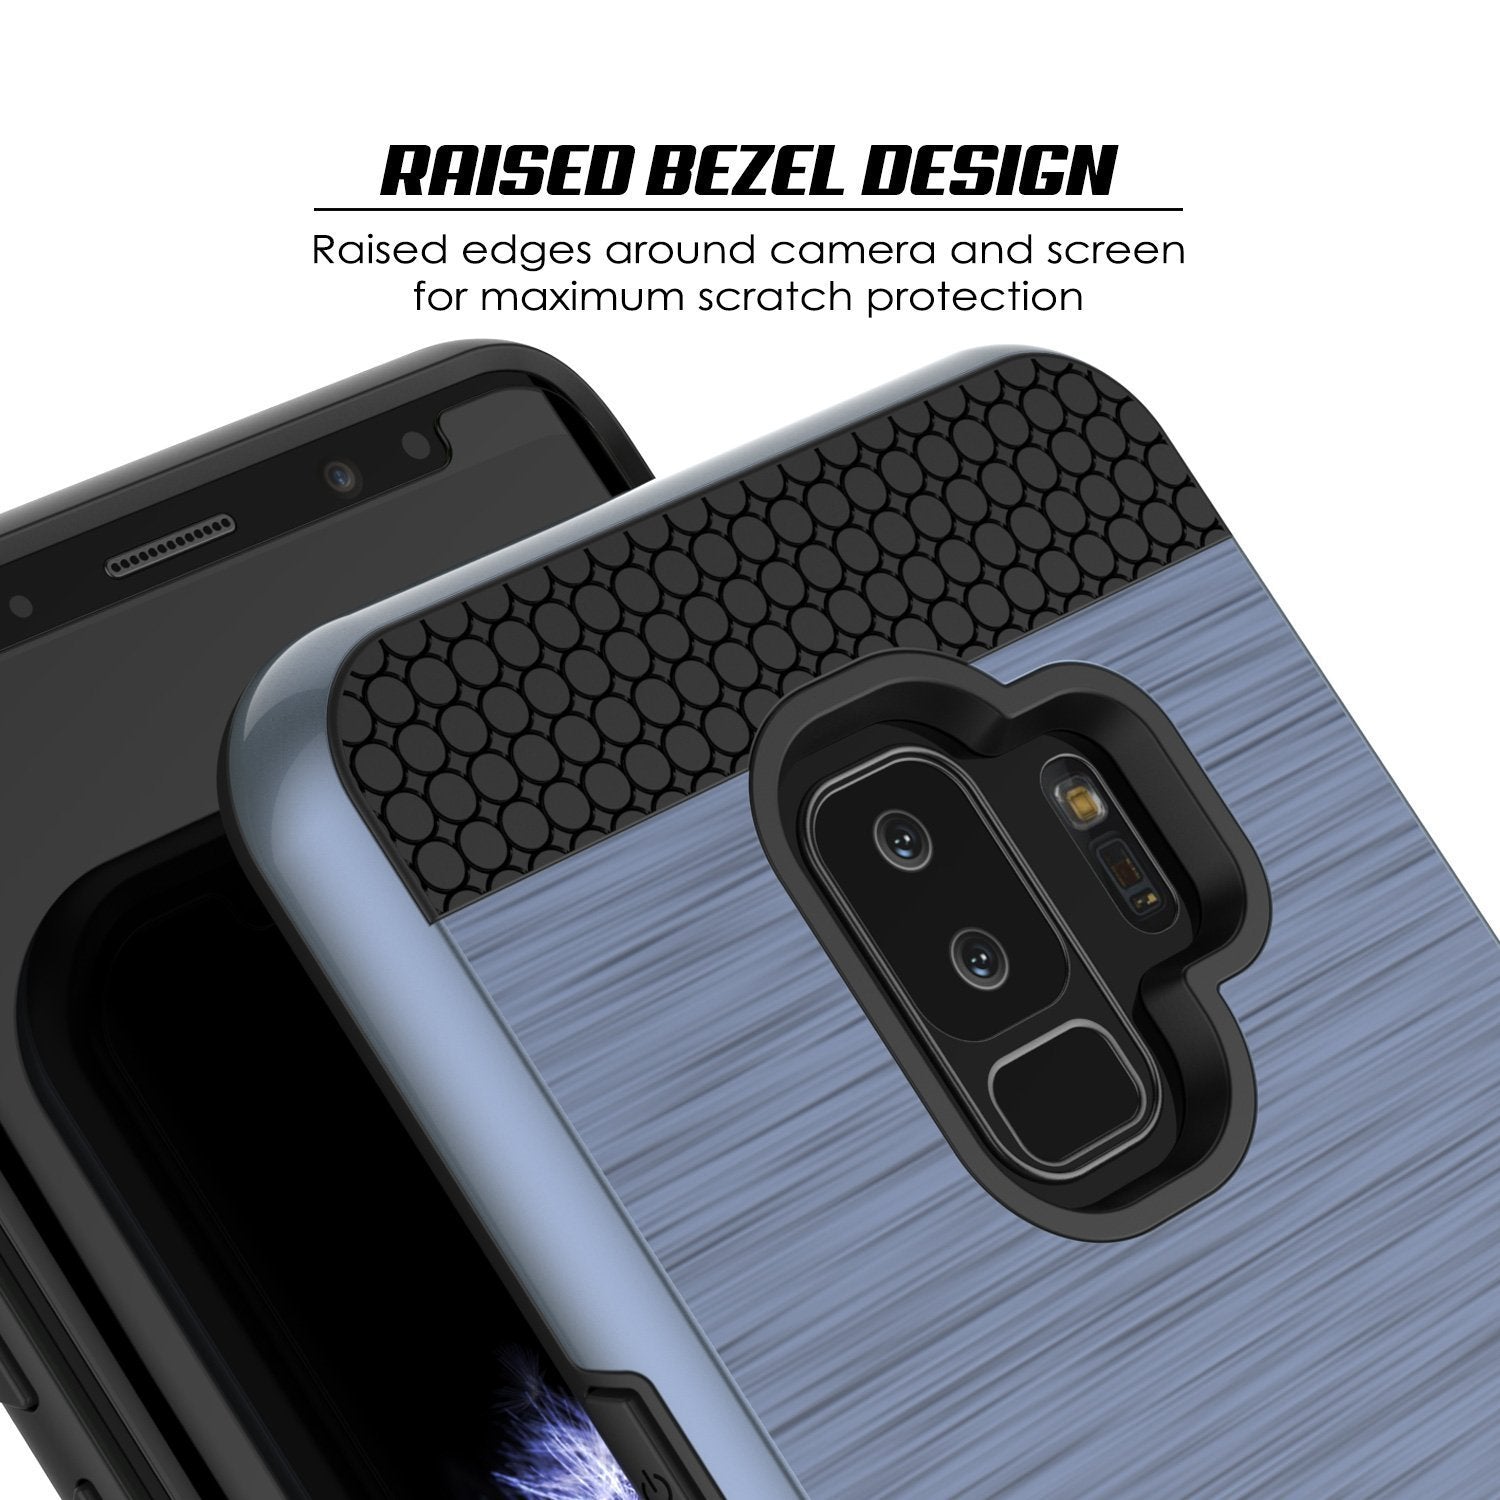 Galaxy S9 Plus Dual-Layer, Anti-Shock, SLOT Series Mobile Case [Navy]